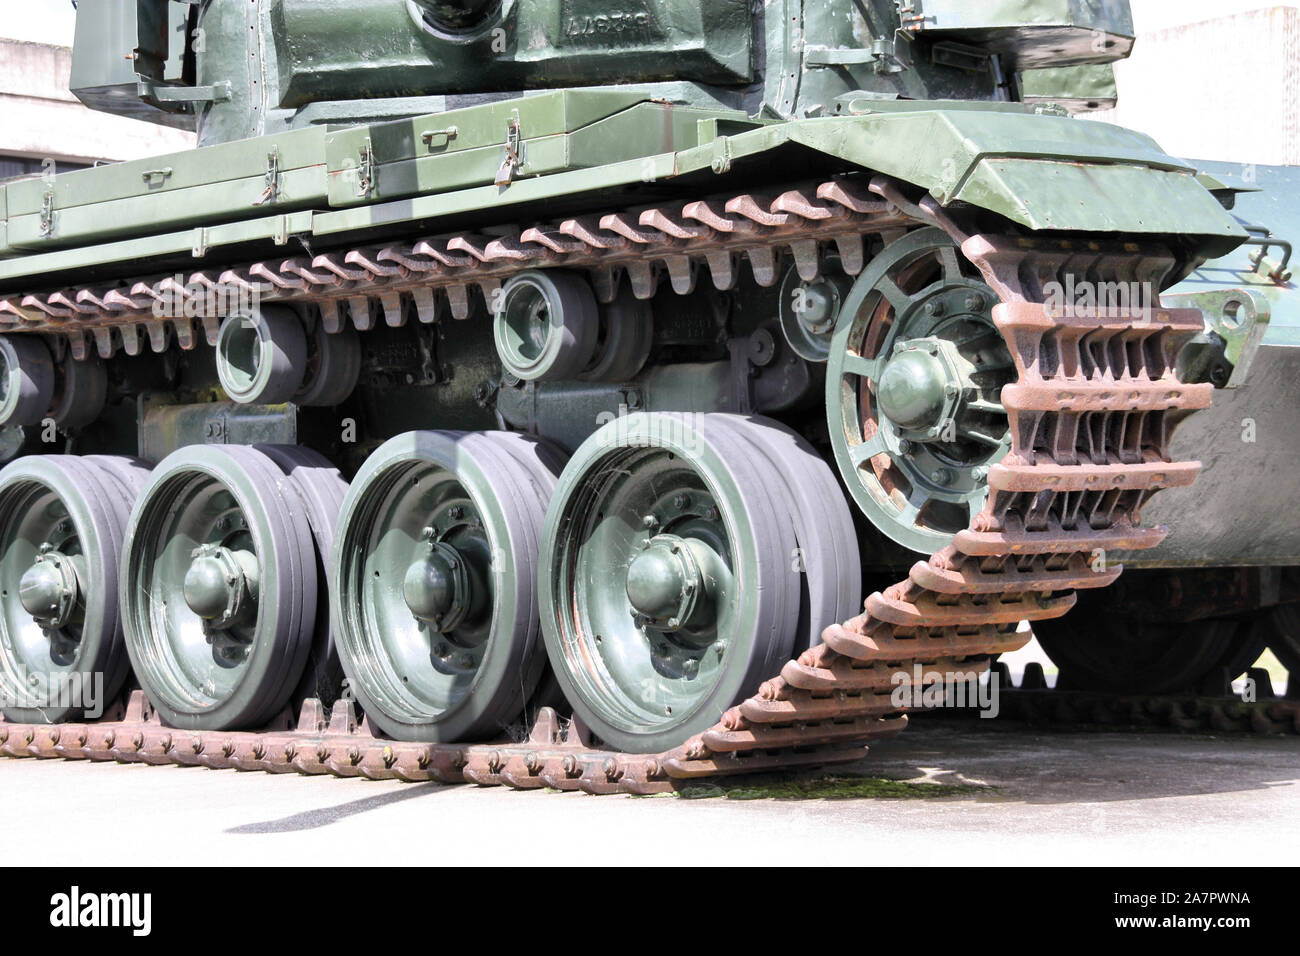 A41 Centurion Battle Tank auf Anzeige an die QEII Armee Memorial Museum - Waiouru, Neuseeland. Stockfoto